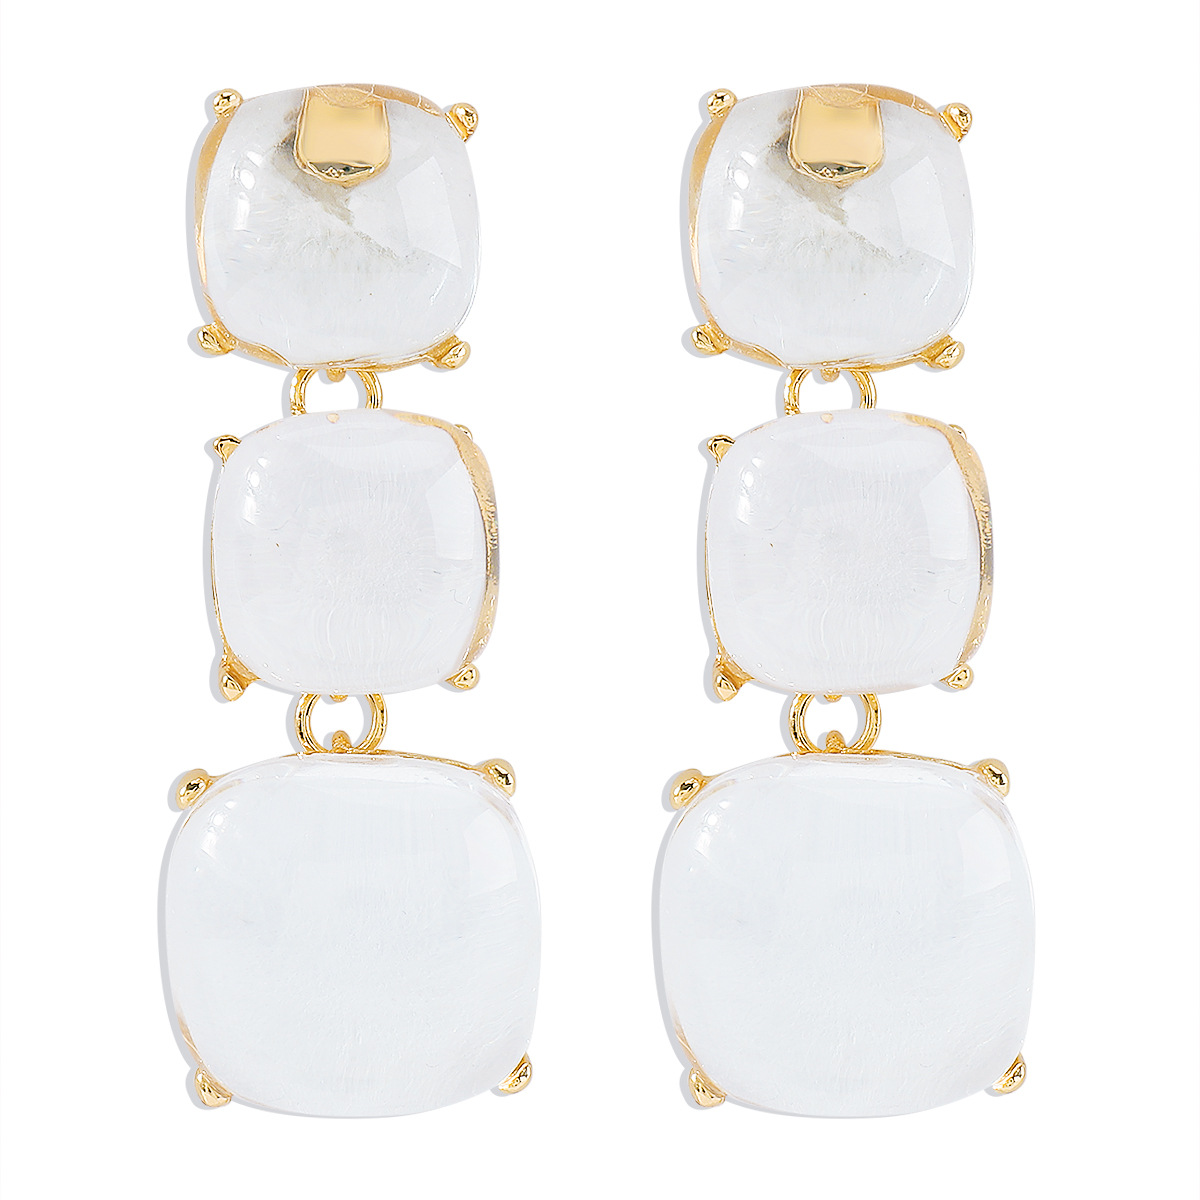 3:White earrings